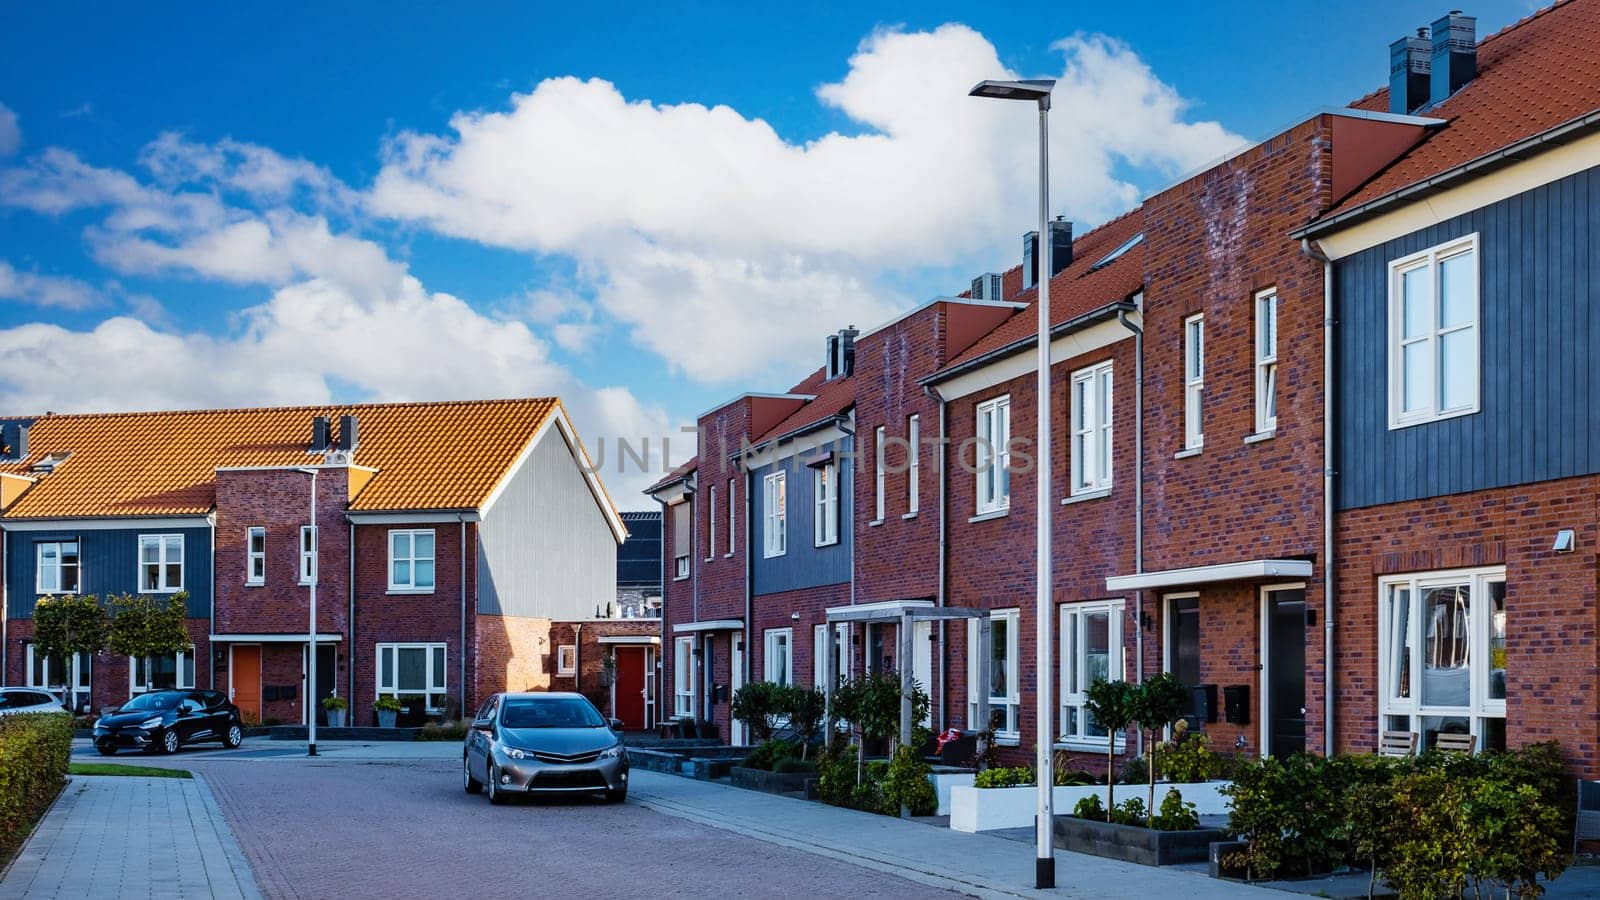 Dutch Suburban area with modern family houses, street with modern family homes in the Netherlands